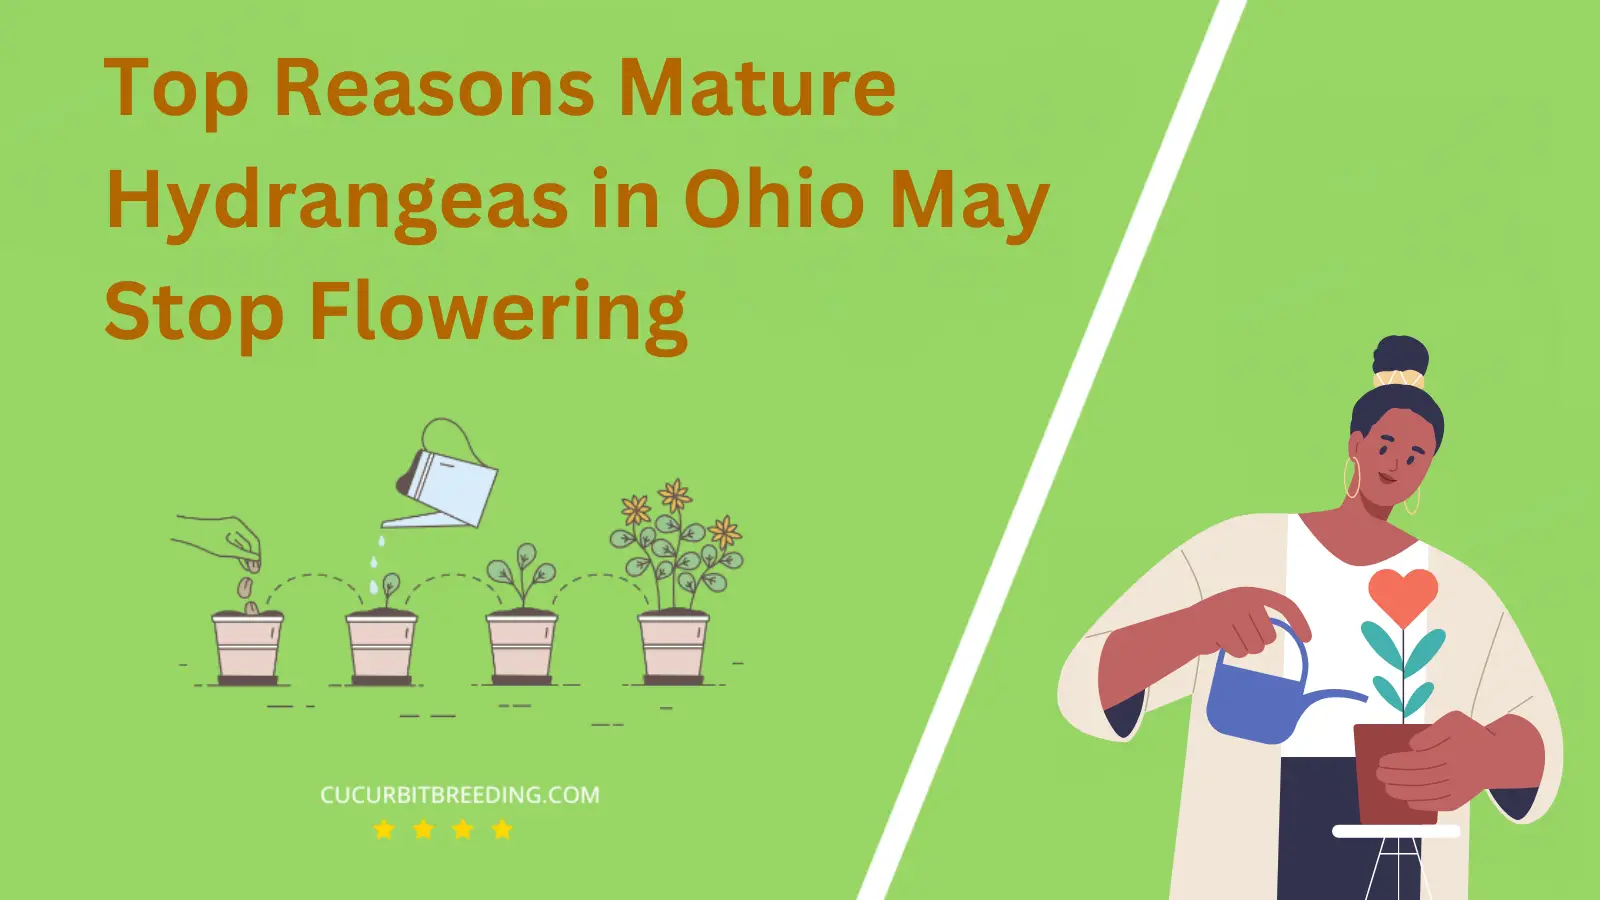 Top Reasons Mature Hydrangeas in Ohio May Stop Flowering